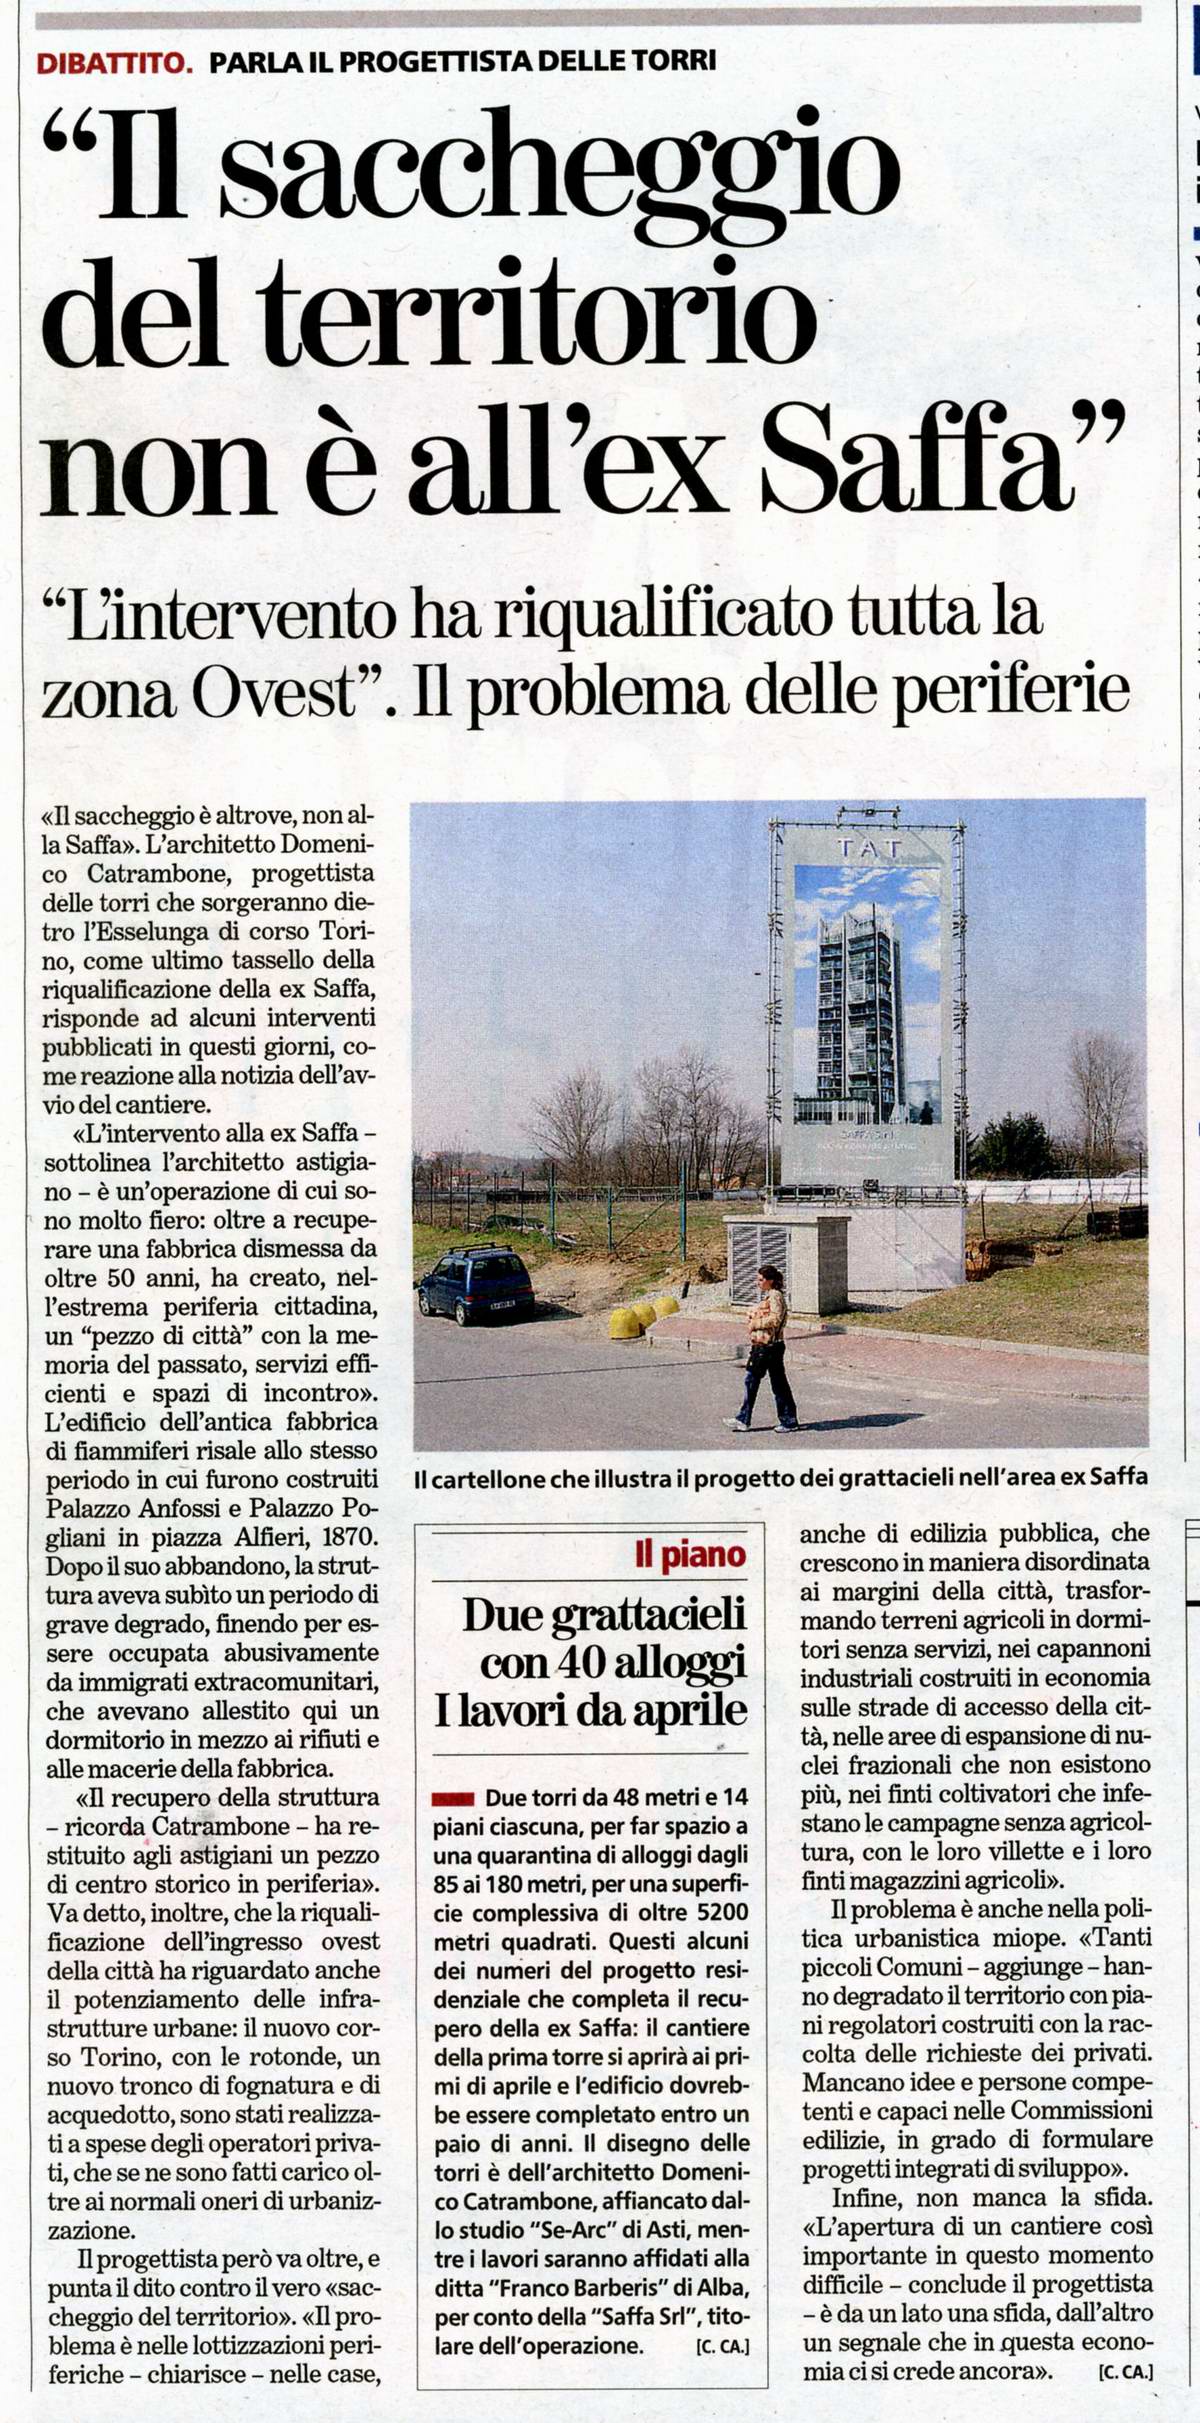 La Stampa (Venerdì 20 marzo 2009)